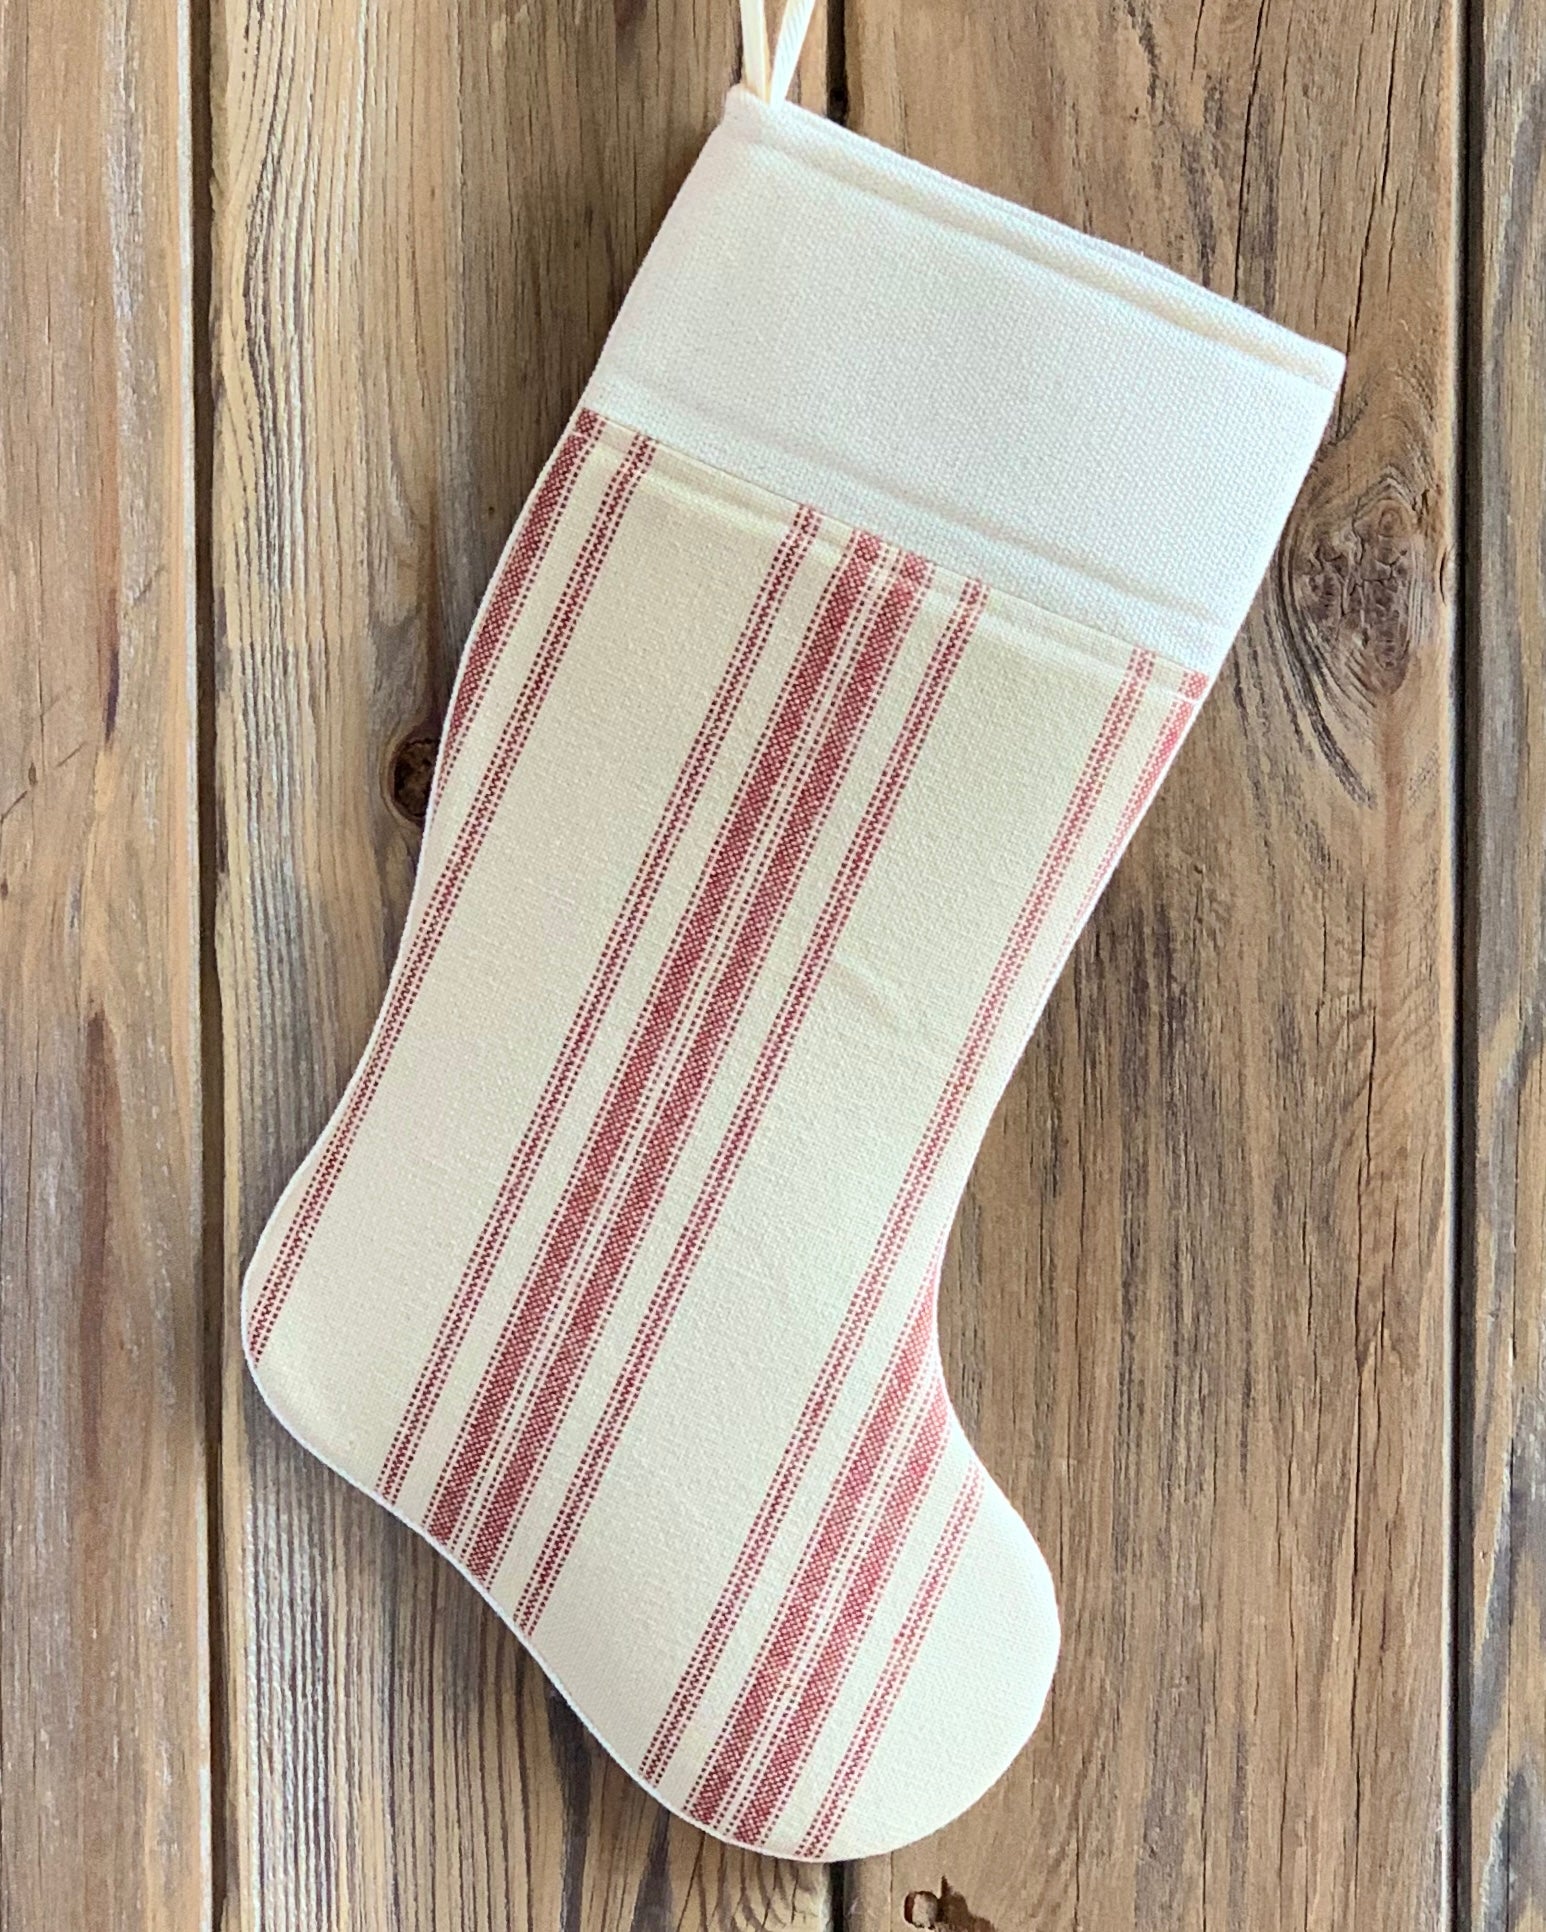 Grain Sack Christmas Stockings - Blue, Red, Black, and Gray - Vertical Stripe